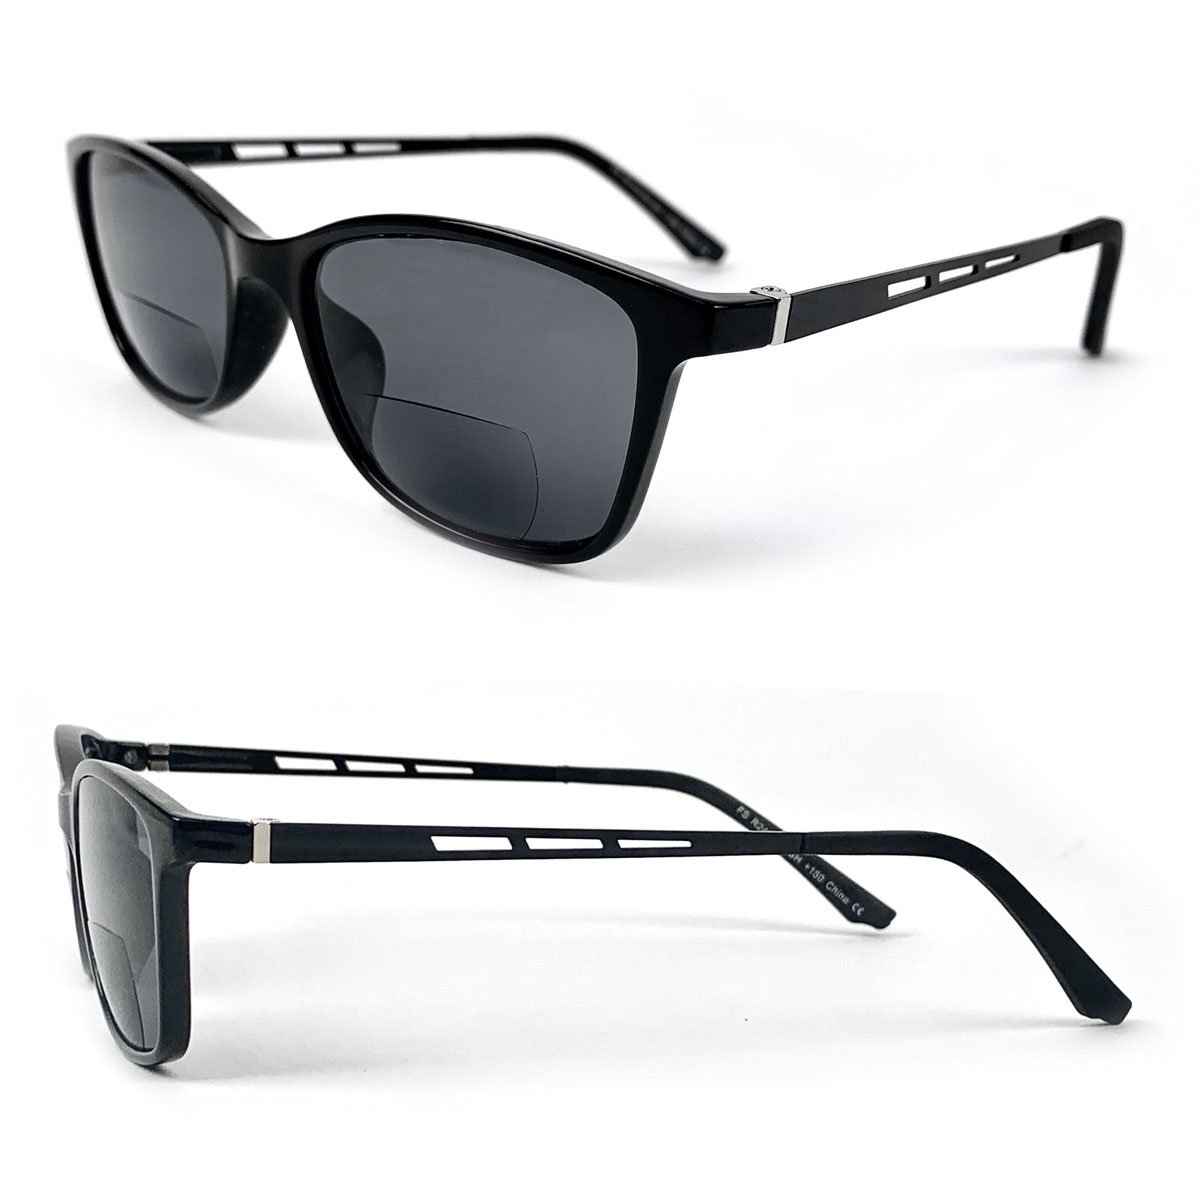 Bifocal Sun Readers Classic Frame Geek Retro Style Reading Sunglasses - Black, +2.25